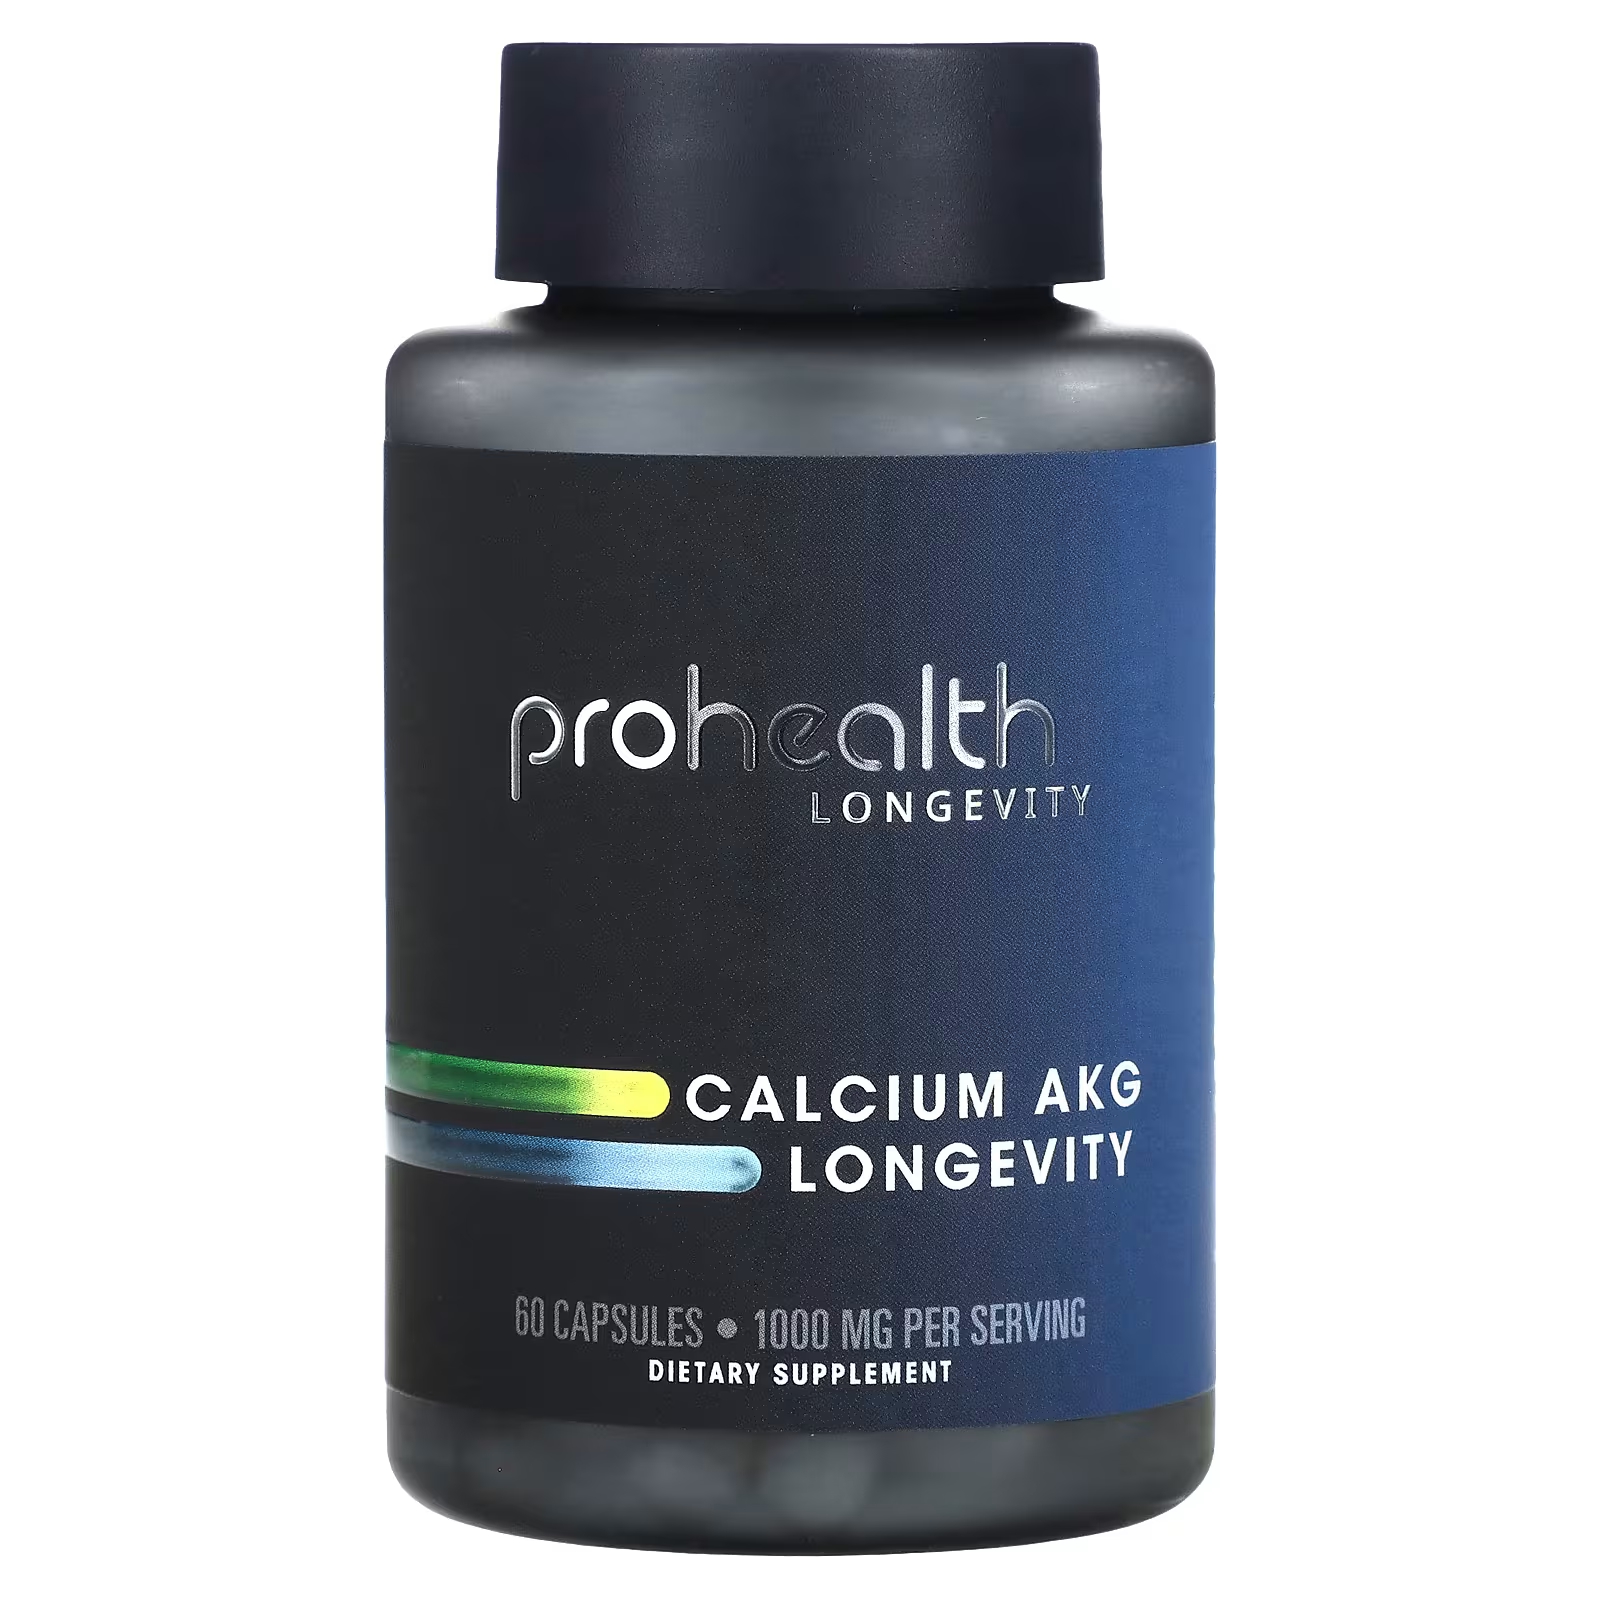 Пищевая добавка ProHealth Longevity Calcium AKG Longevity 1000 мг prohealth longevity mitochondria ignite 675 мг 90 таблеток